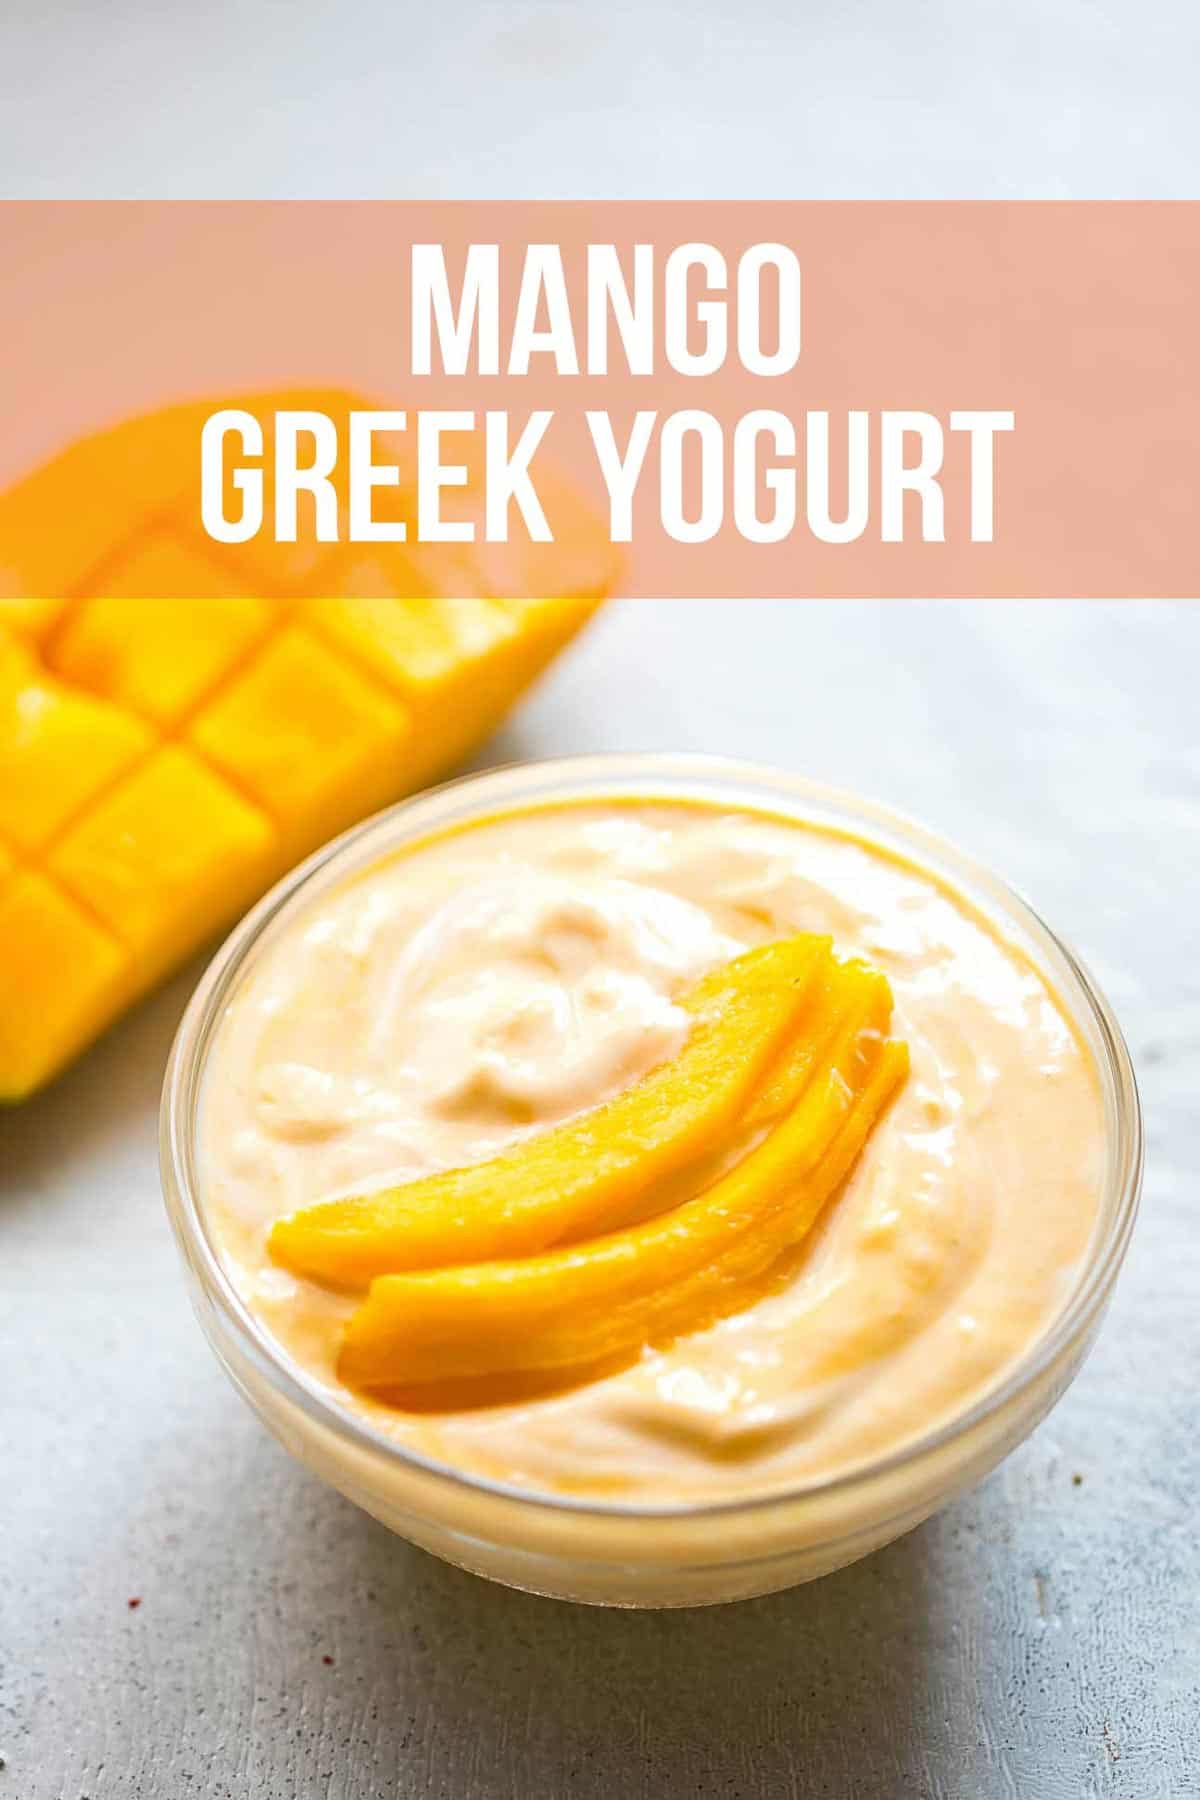 Mango greek yogurt served in a bowl with sliced mango on top